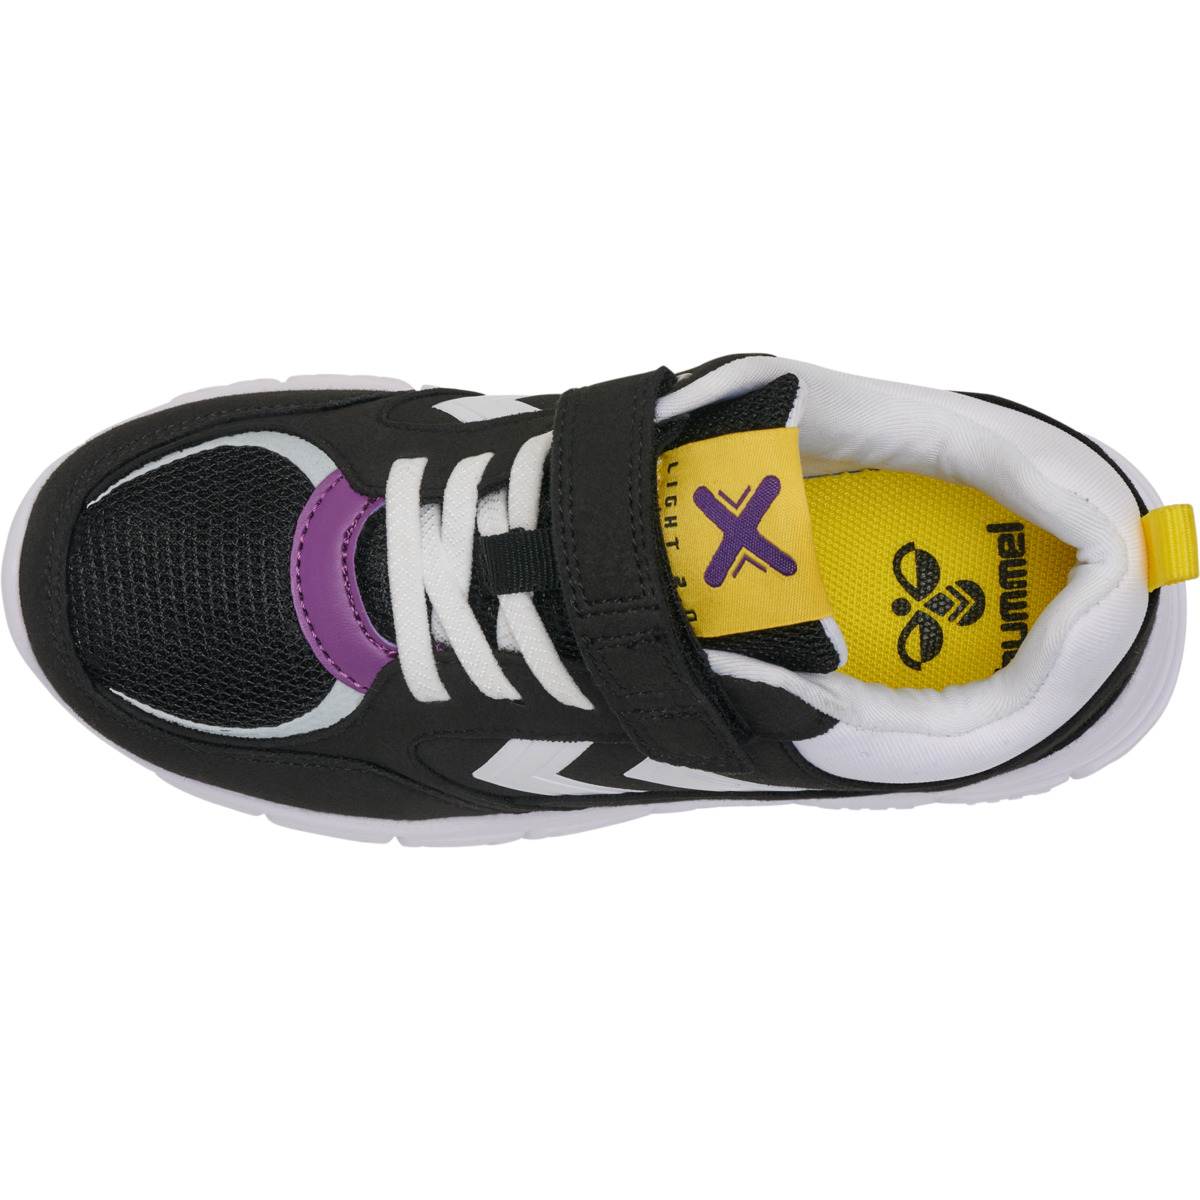  X-Light 2.0 Jr. Sneakers, Sort, 27